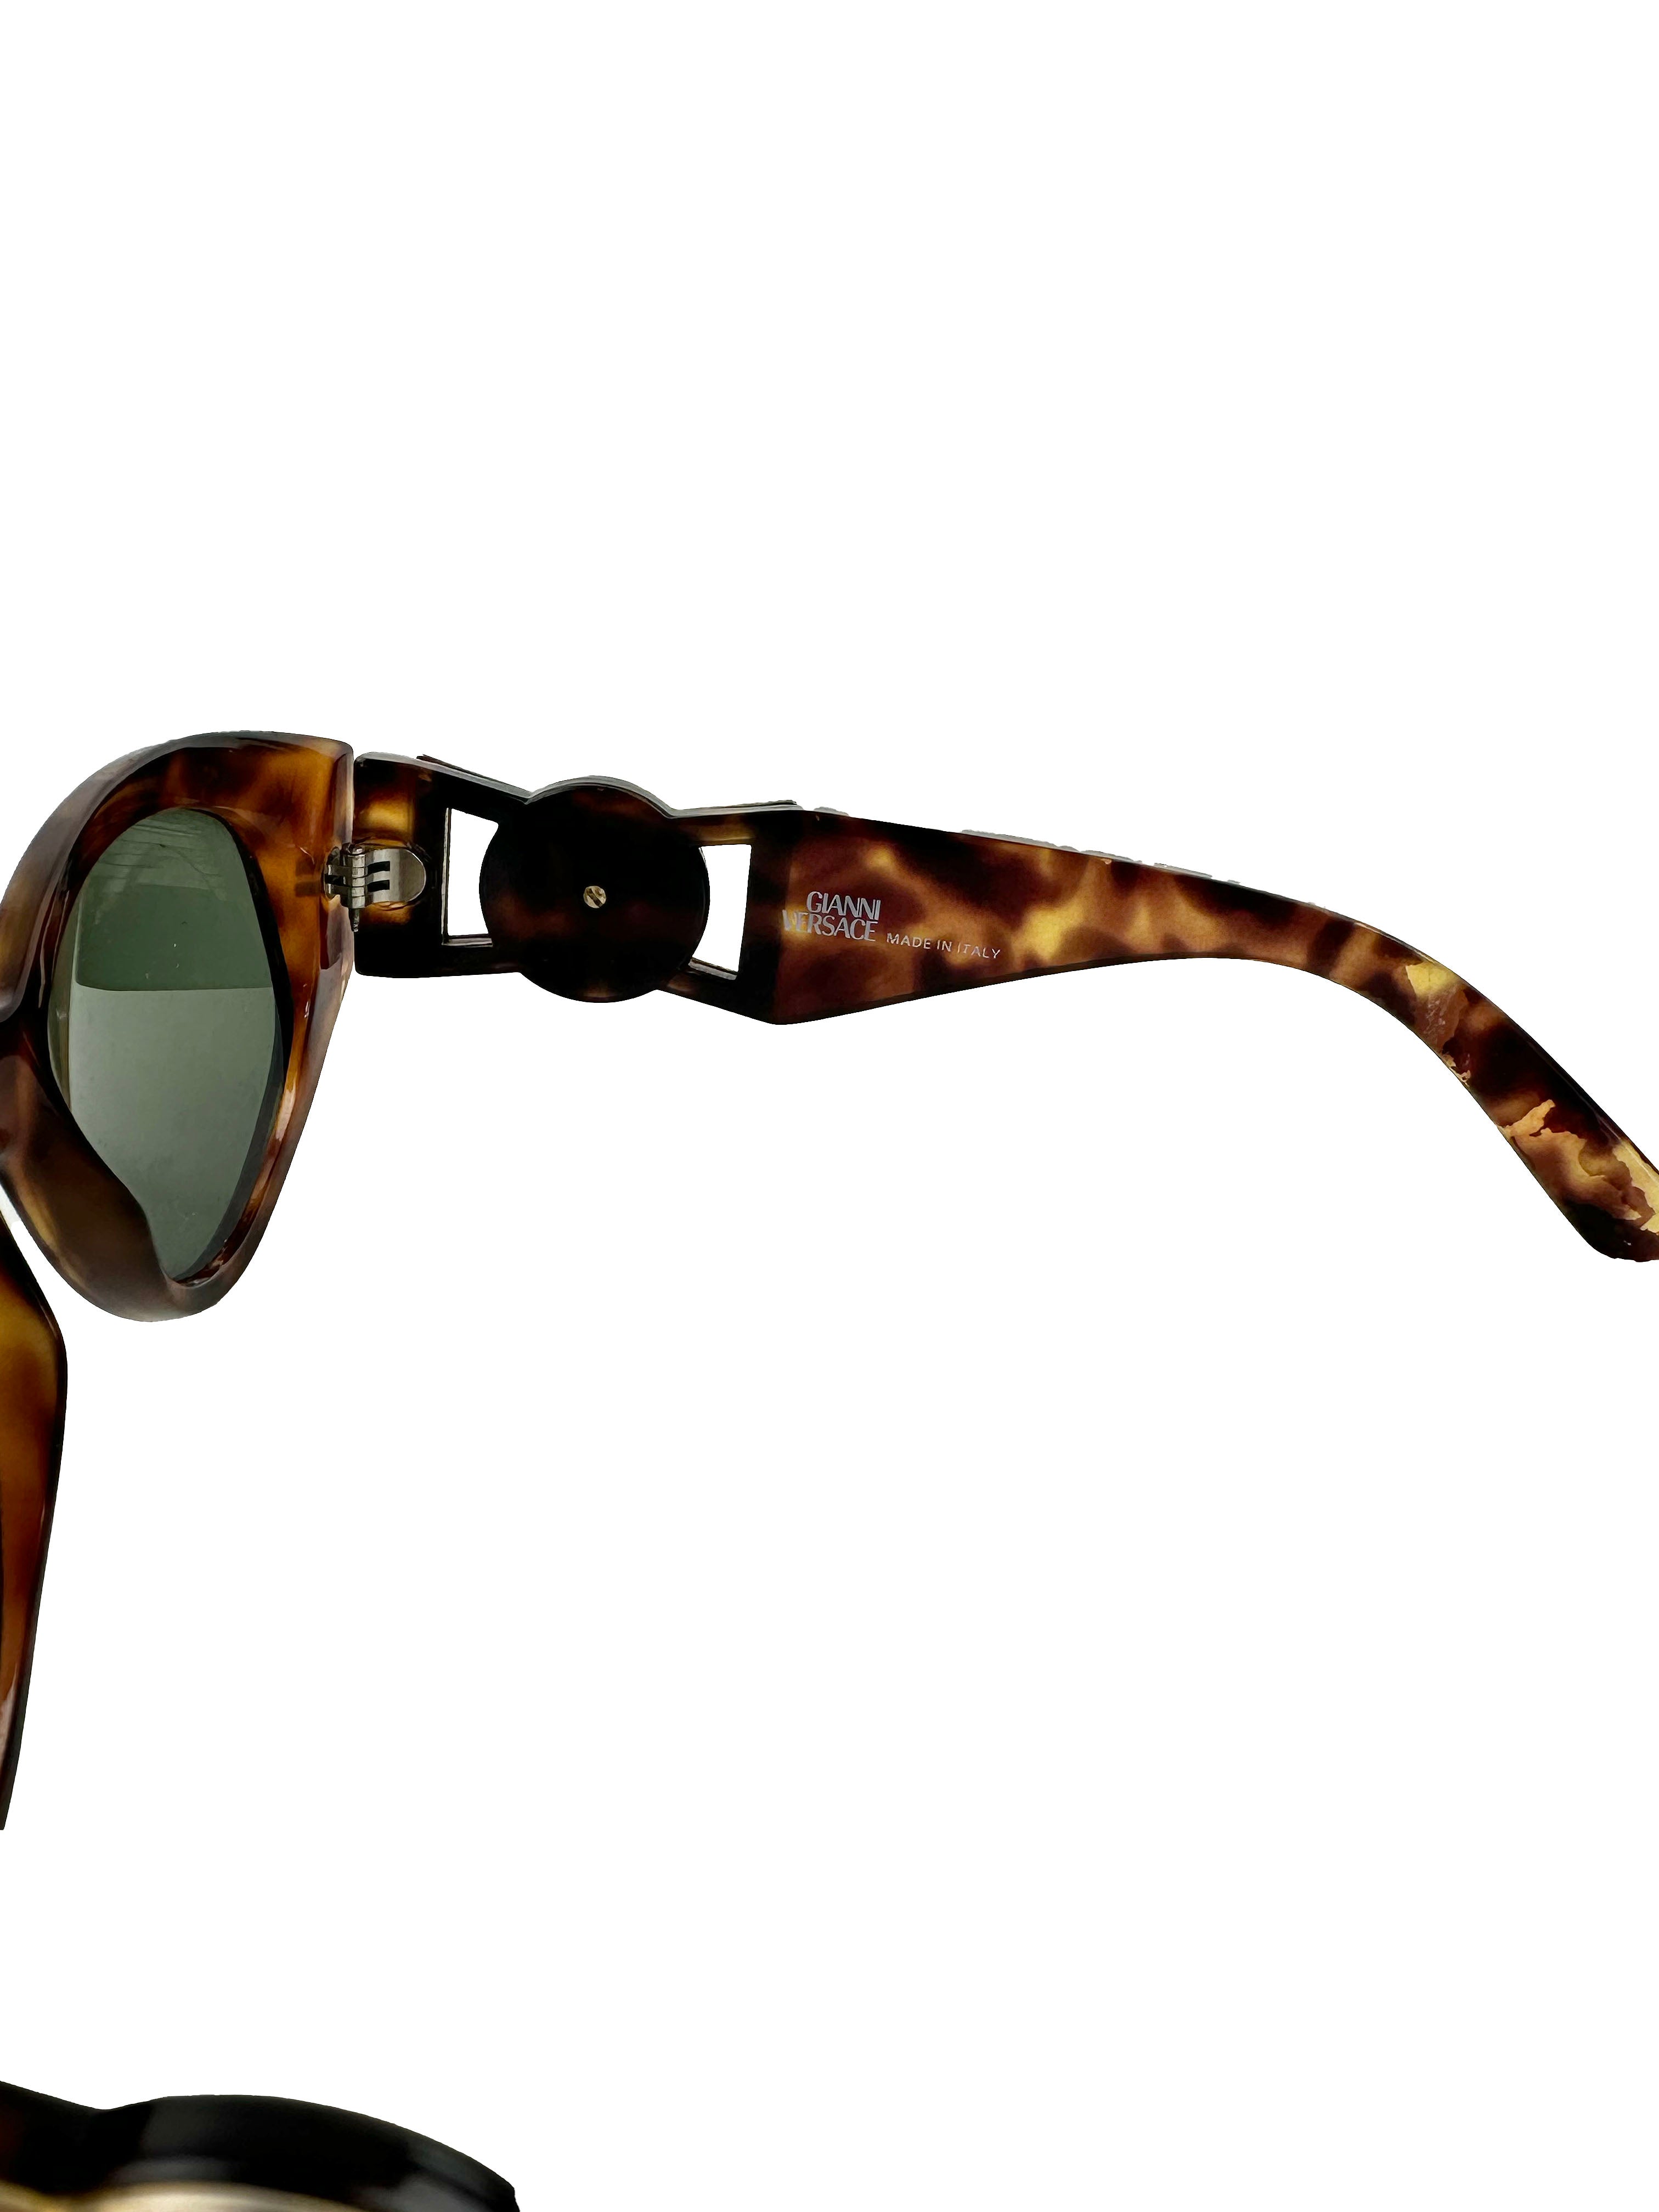 Gianni Versace Tortoise Medusa Sunglasses 90's